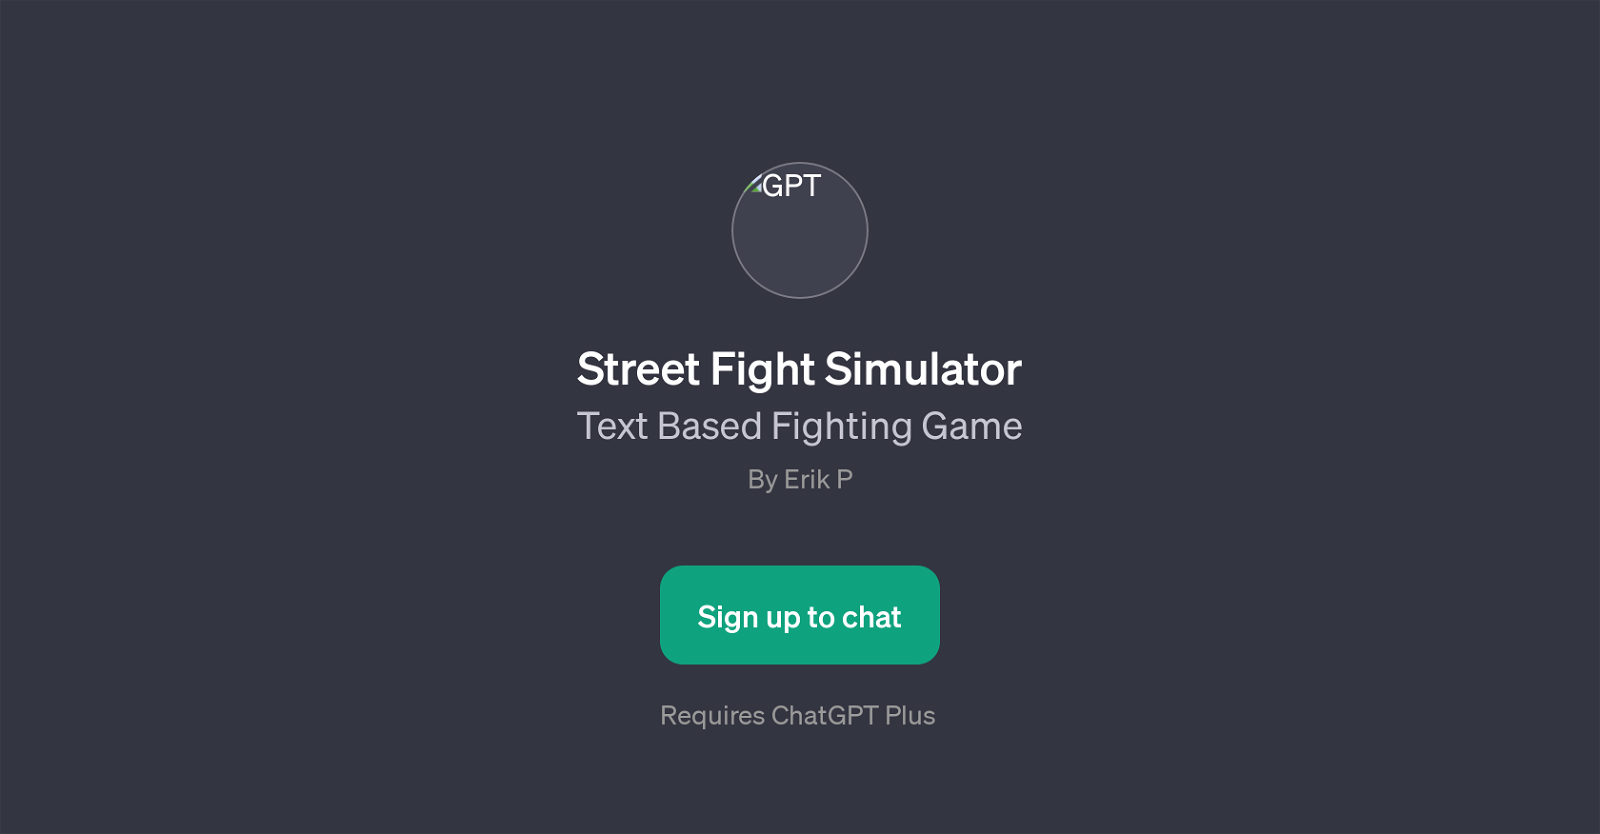 Street Fight Simulator website